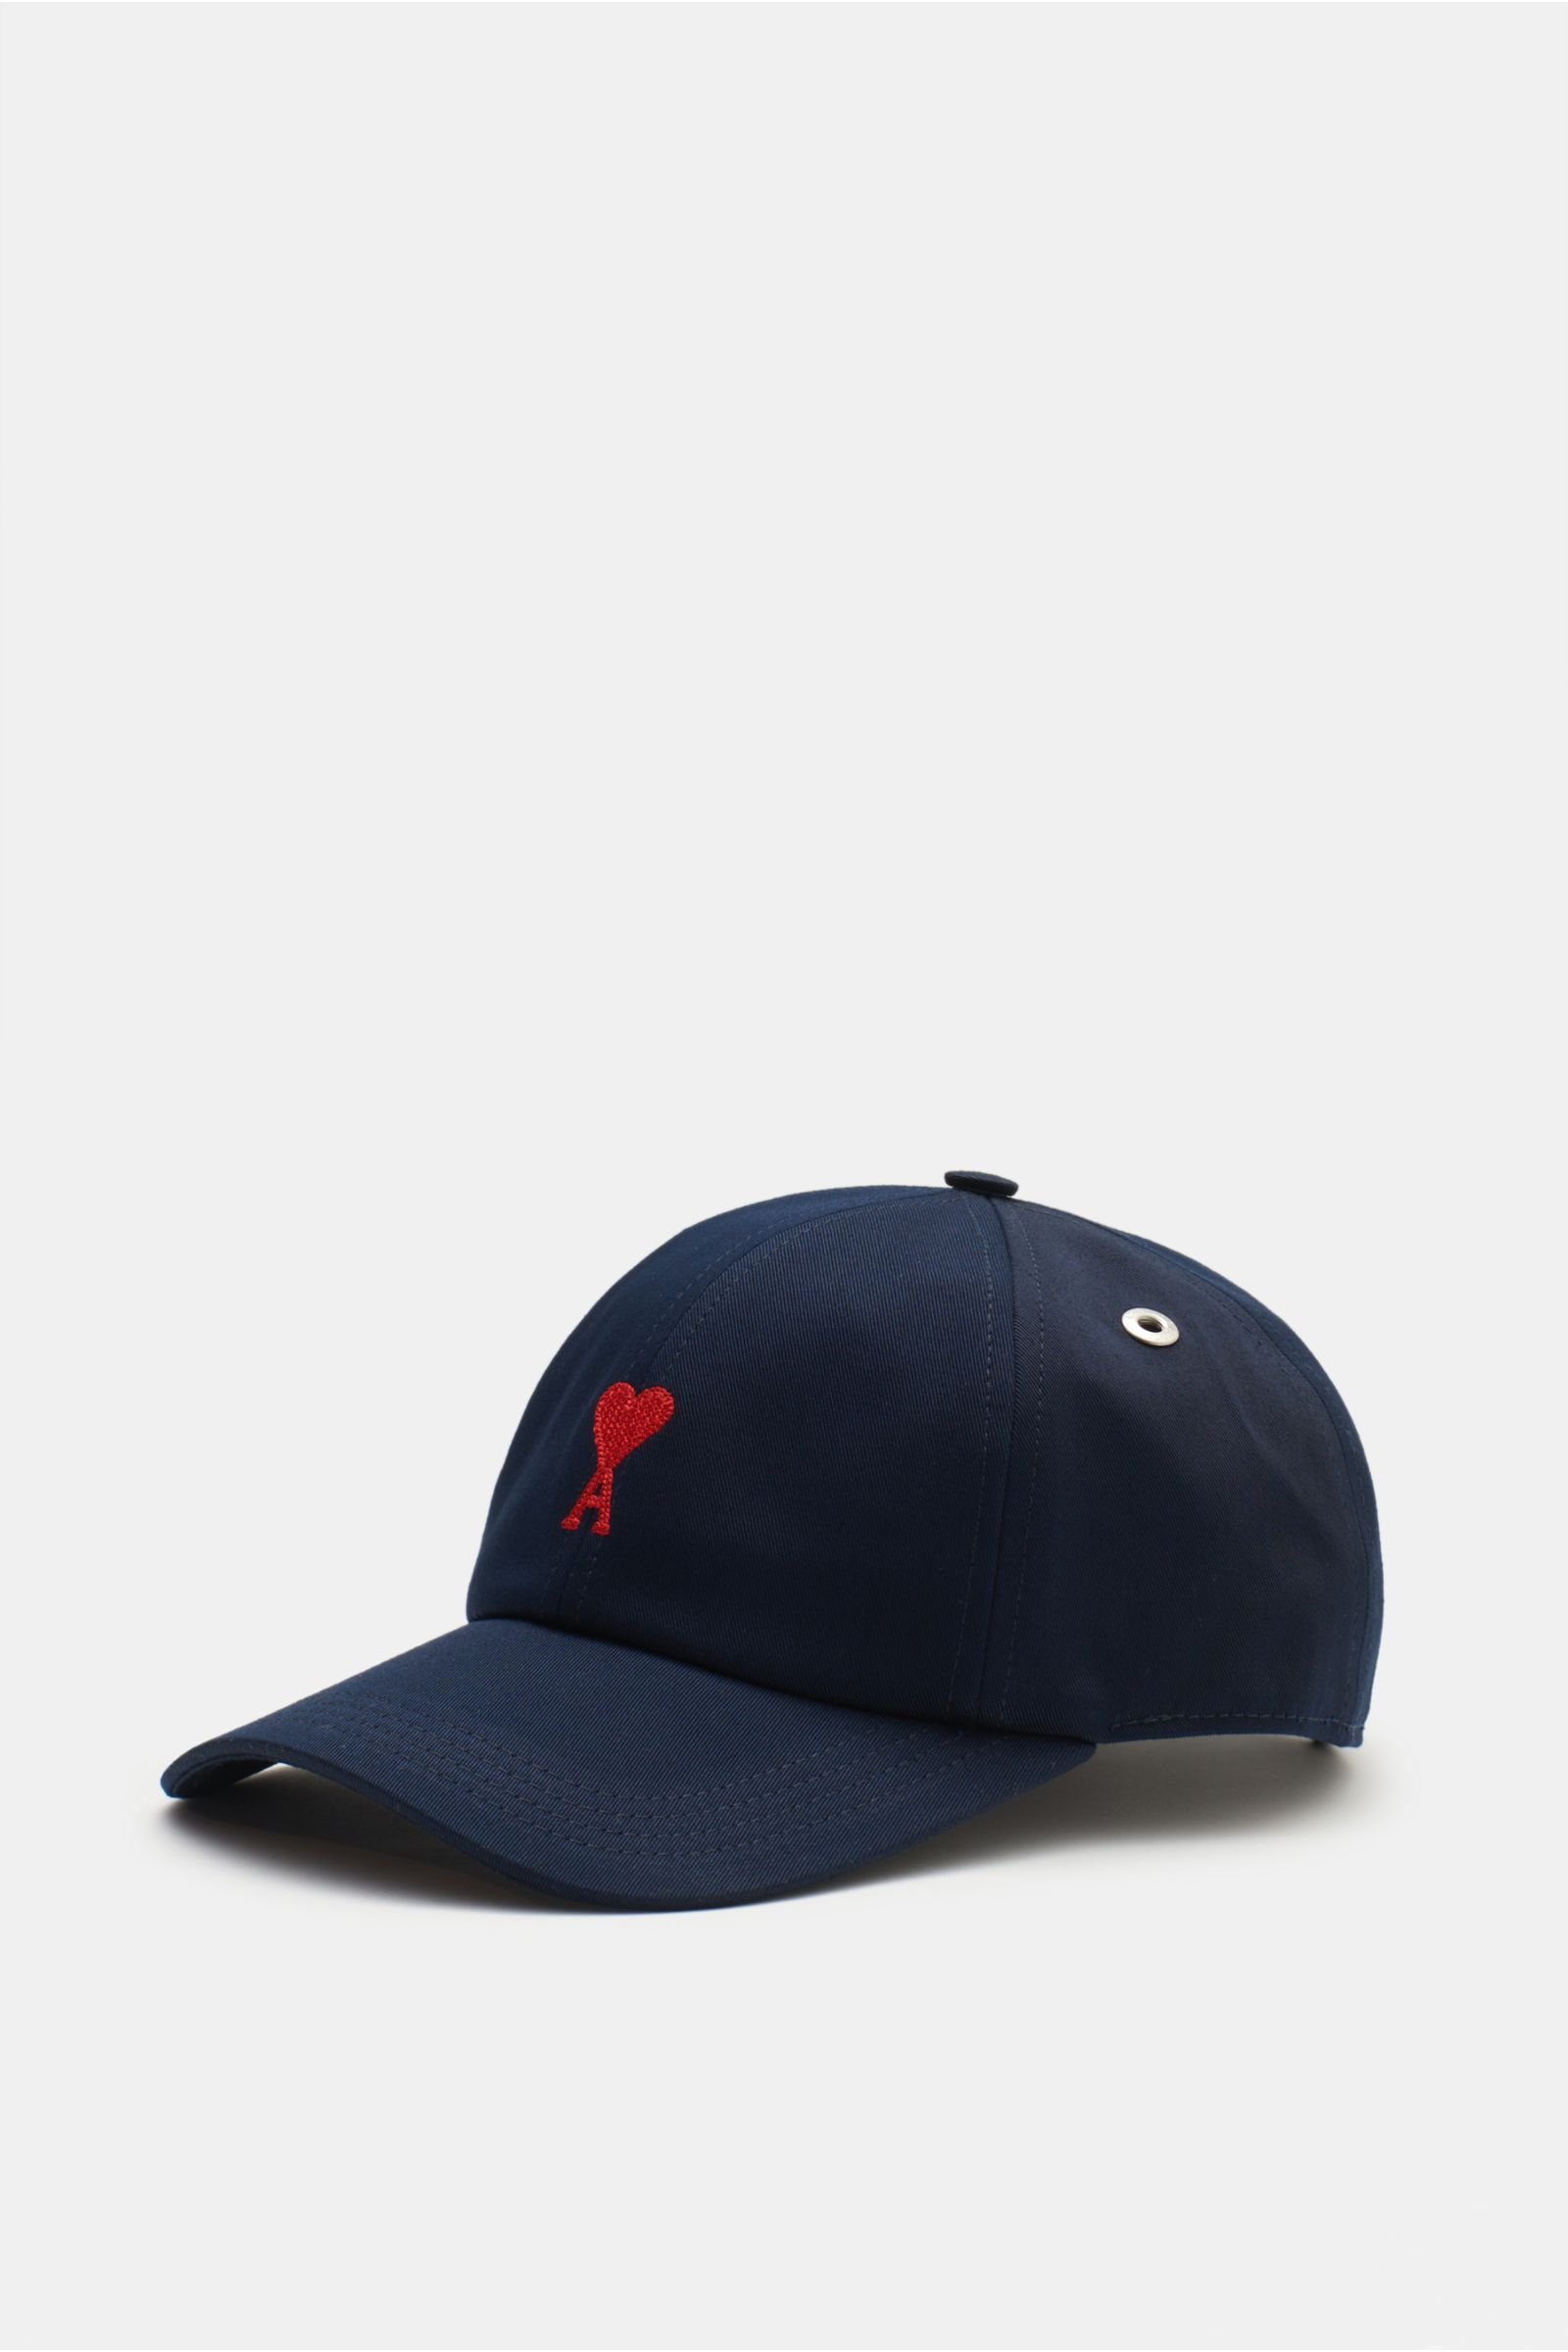 Baseball cap navy